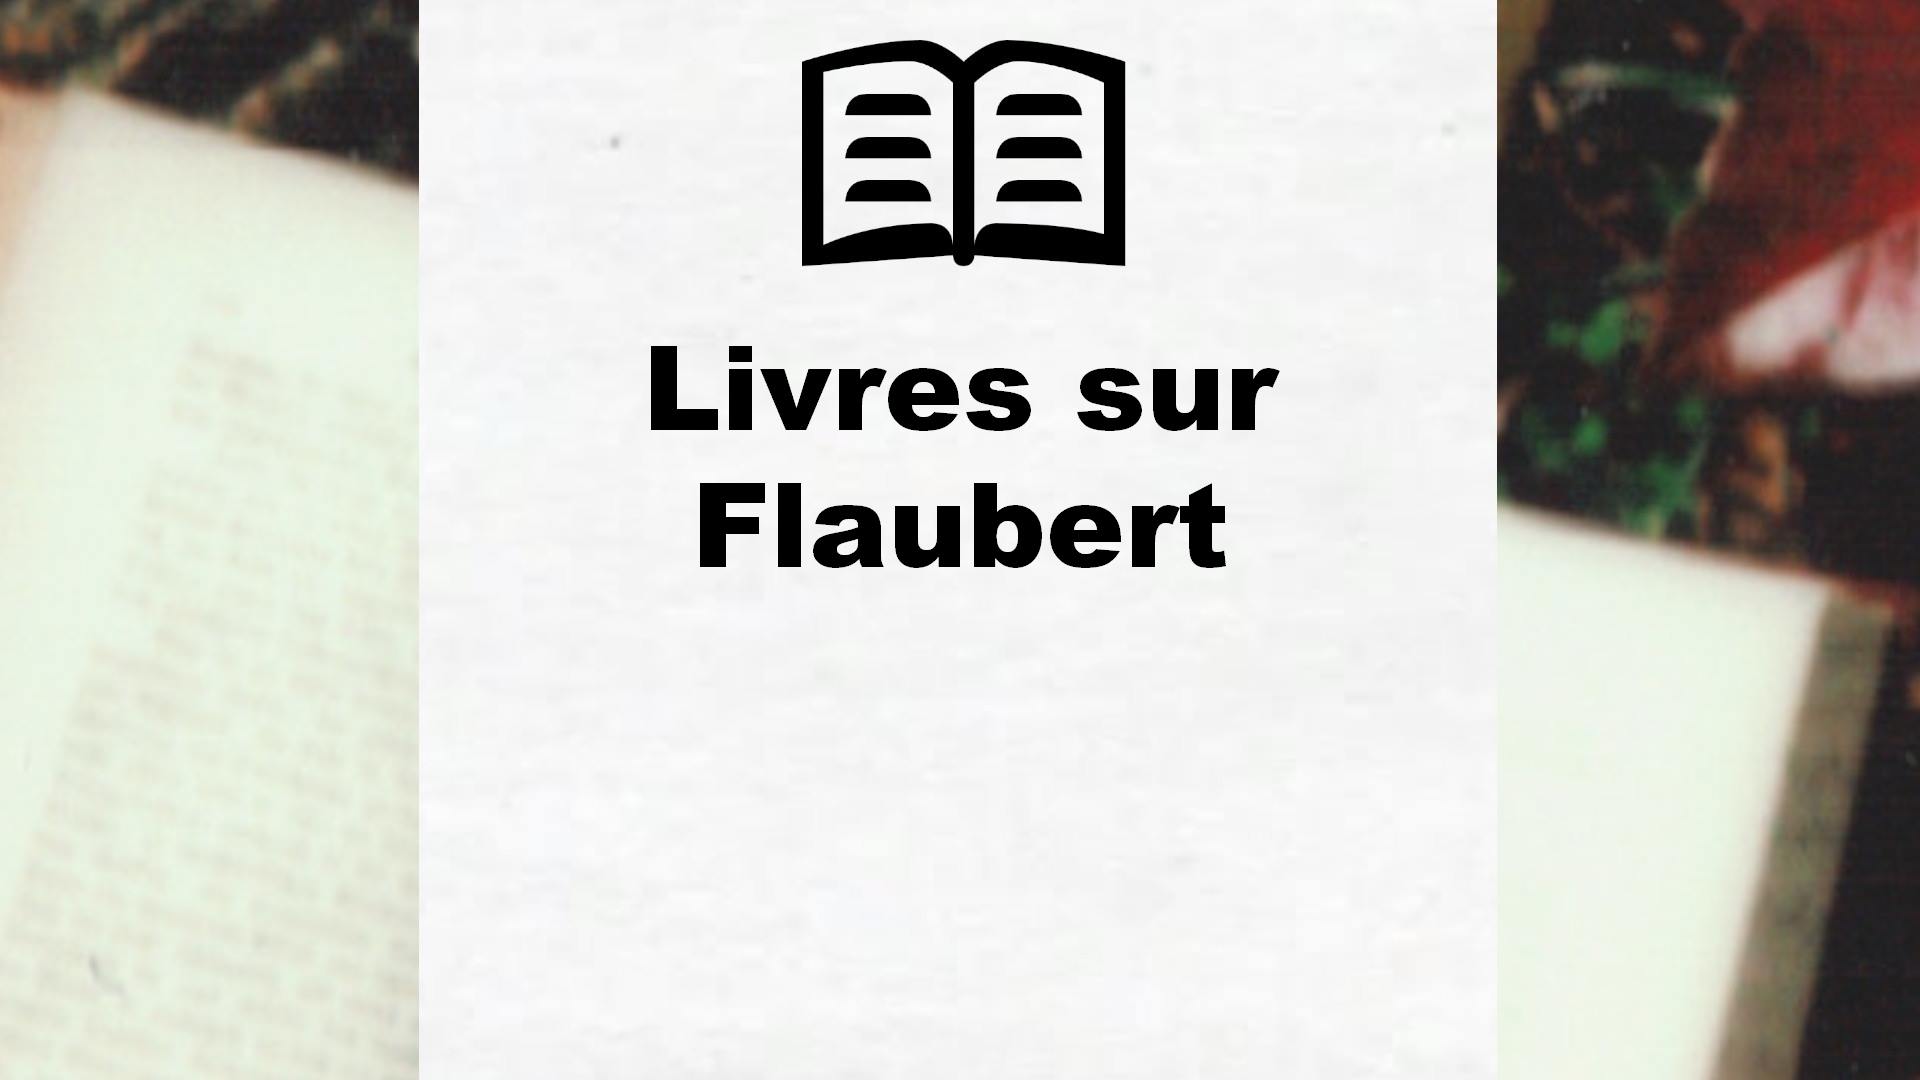 Livres sur Flaubert